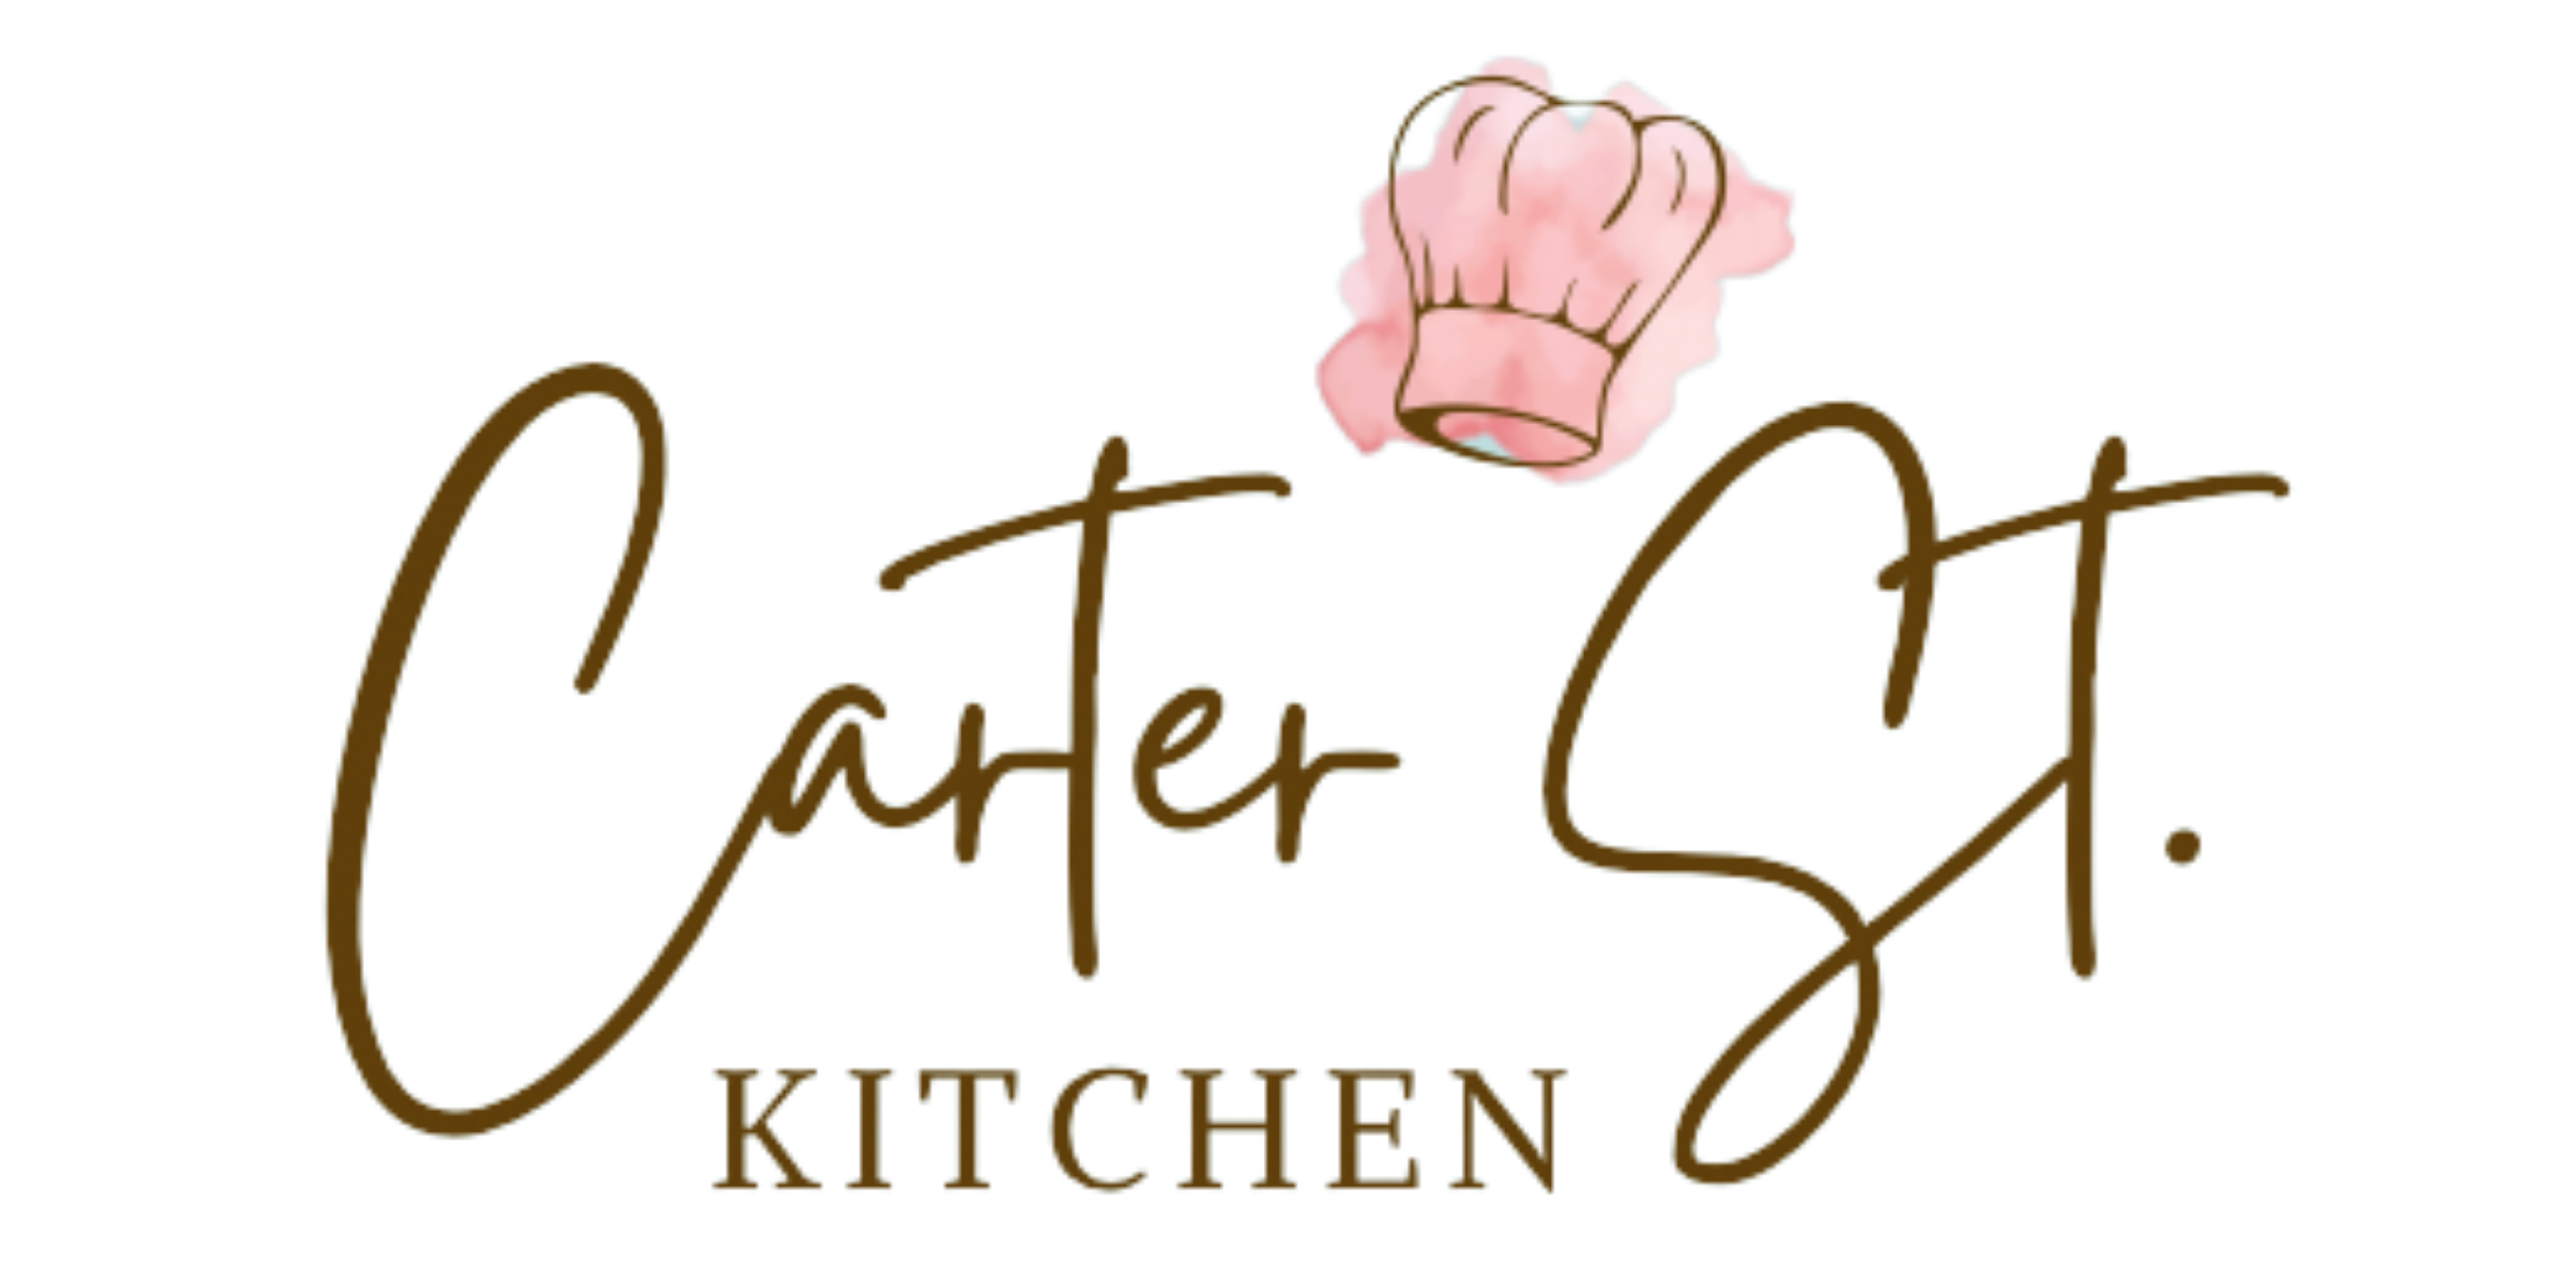 Carter Street Kitchen